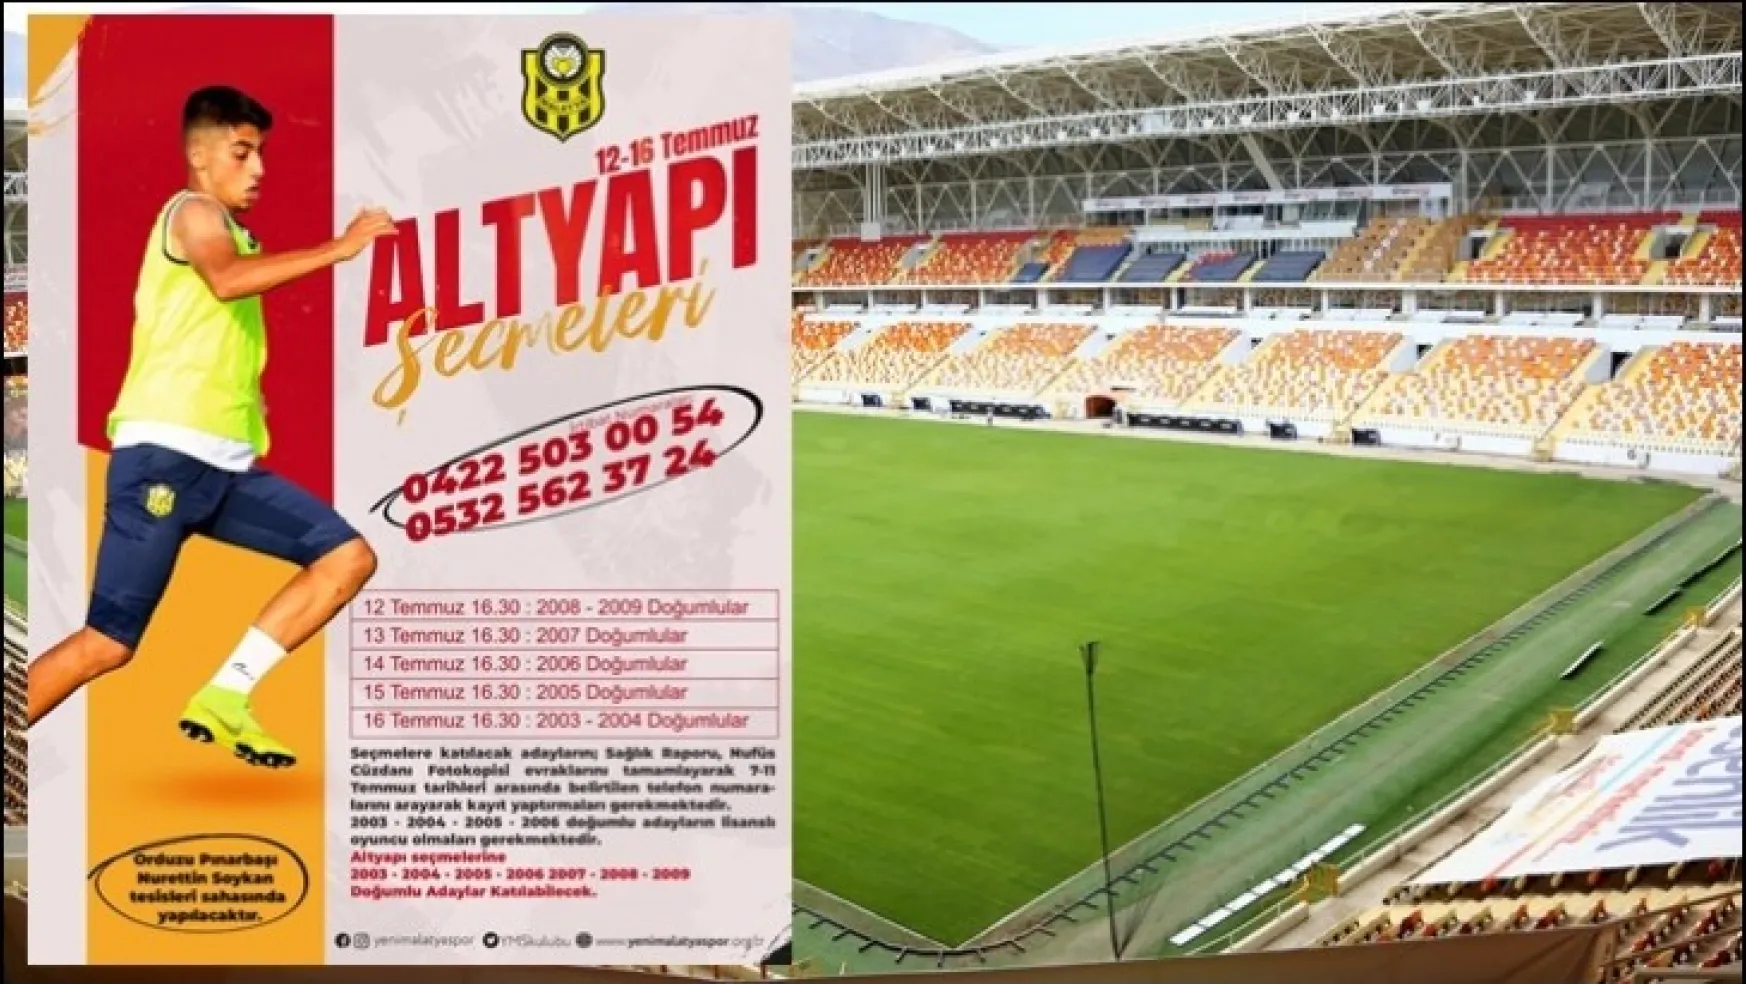 Malatya Stadyumu Yeni Sezona Hazırlandı